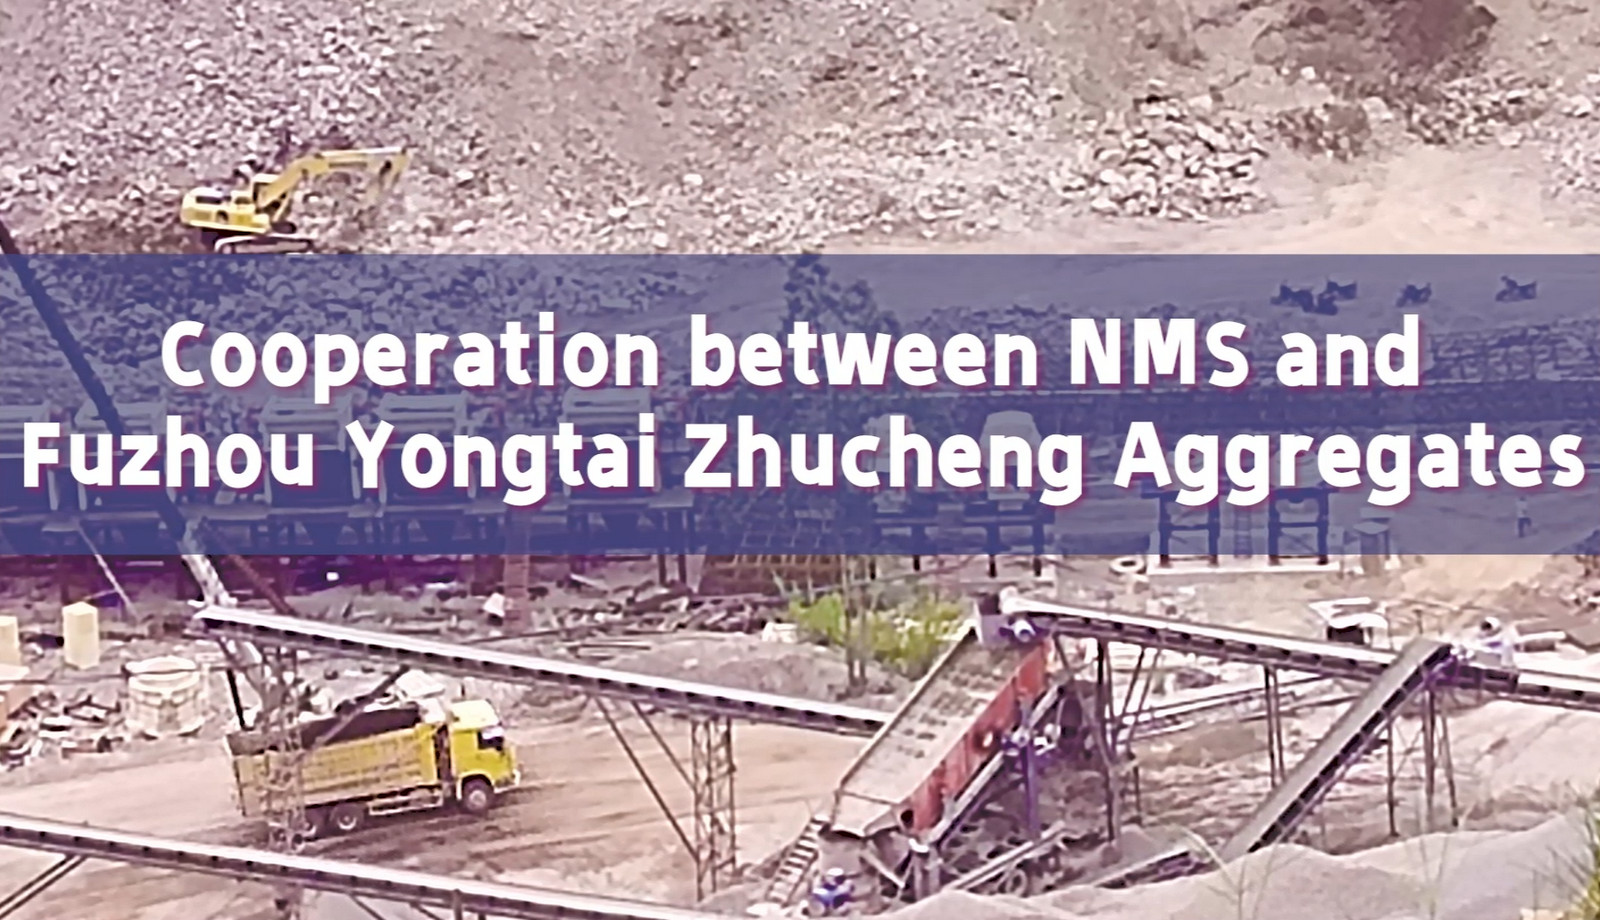 Cooperation between NMS and Fuzhou Yongtai Zhucheng Aggregates